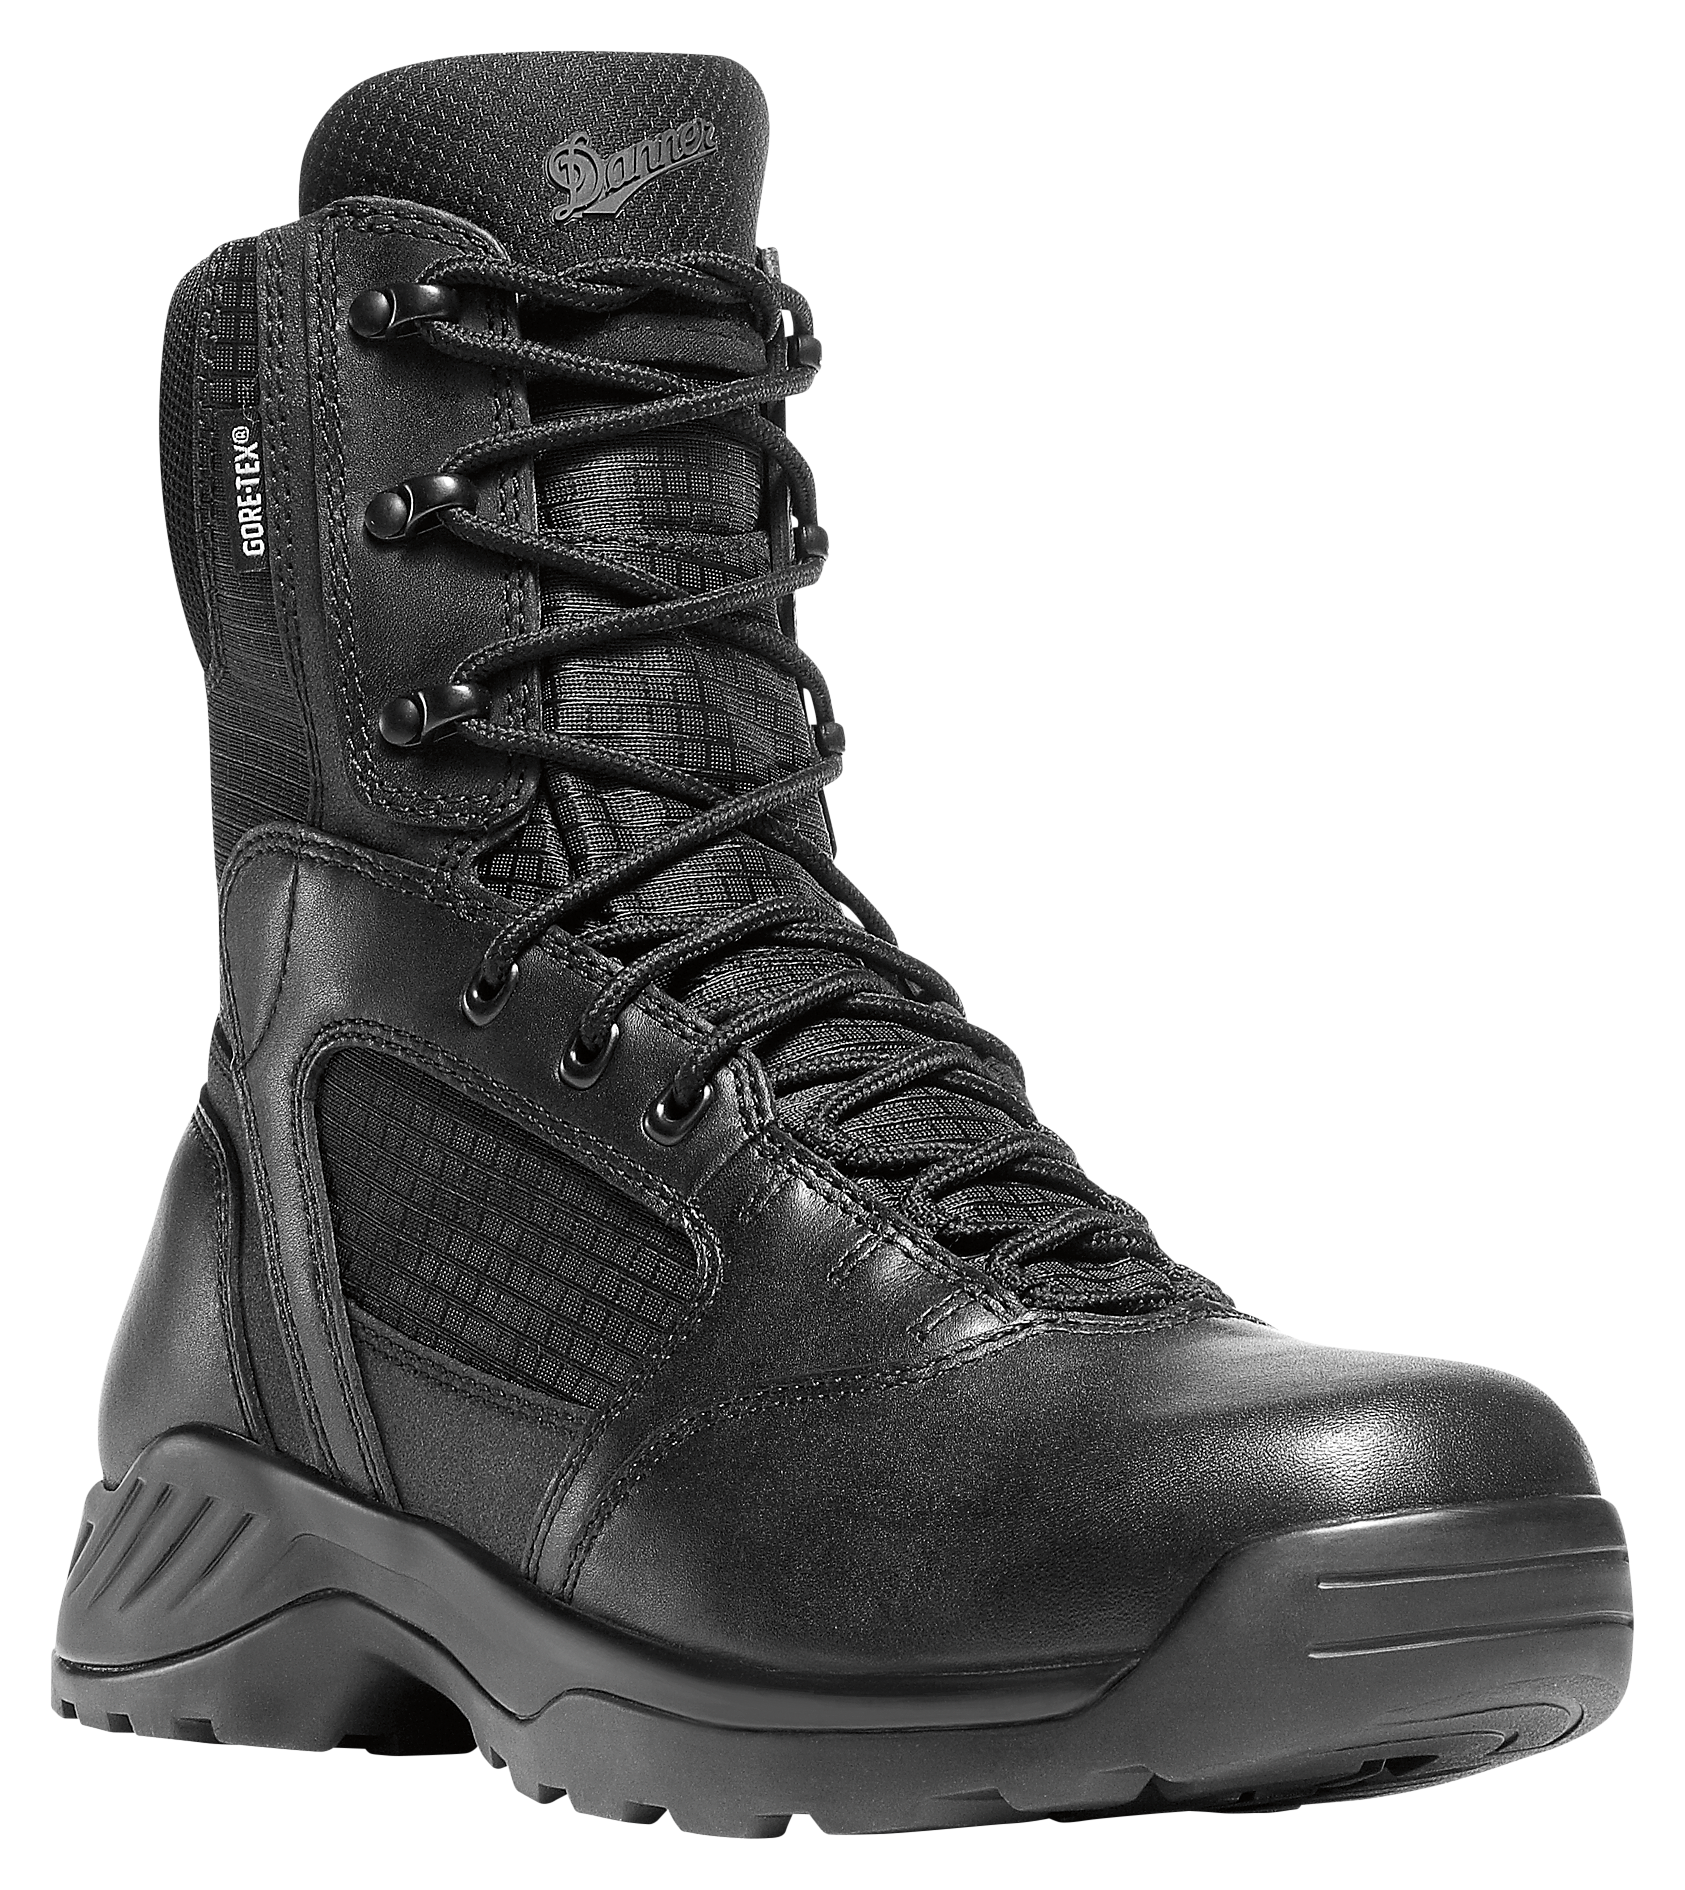 Danner Kinetic GTX Side-Zip Waterproof Tactical Duty Boots for Men - Black - 6.5W